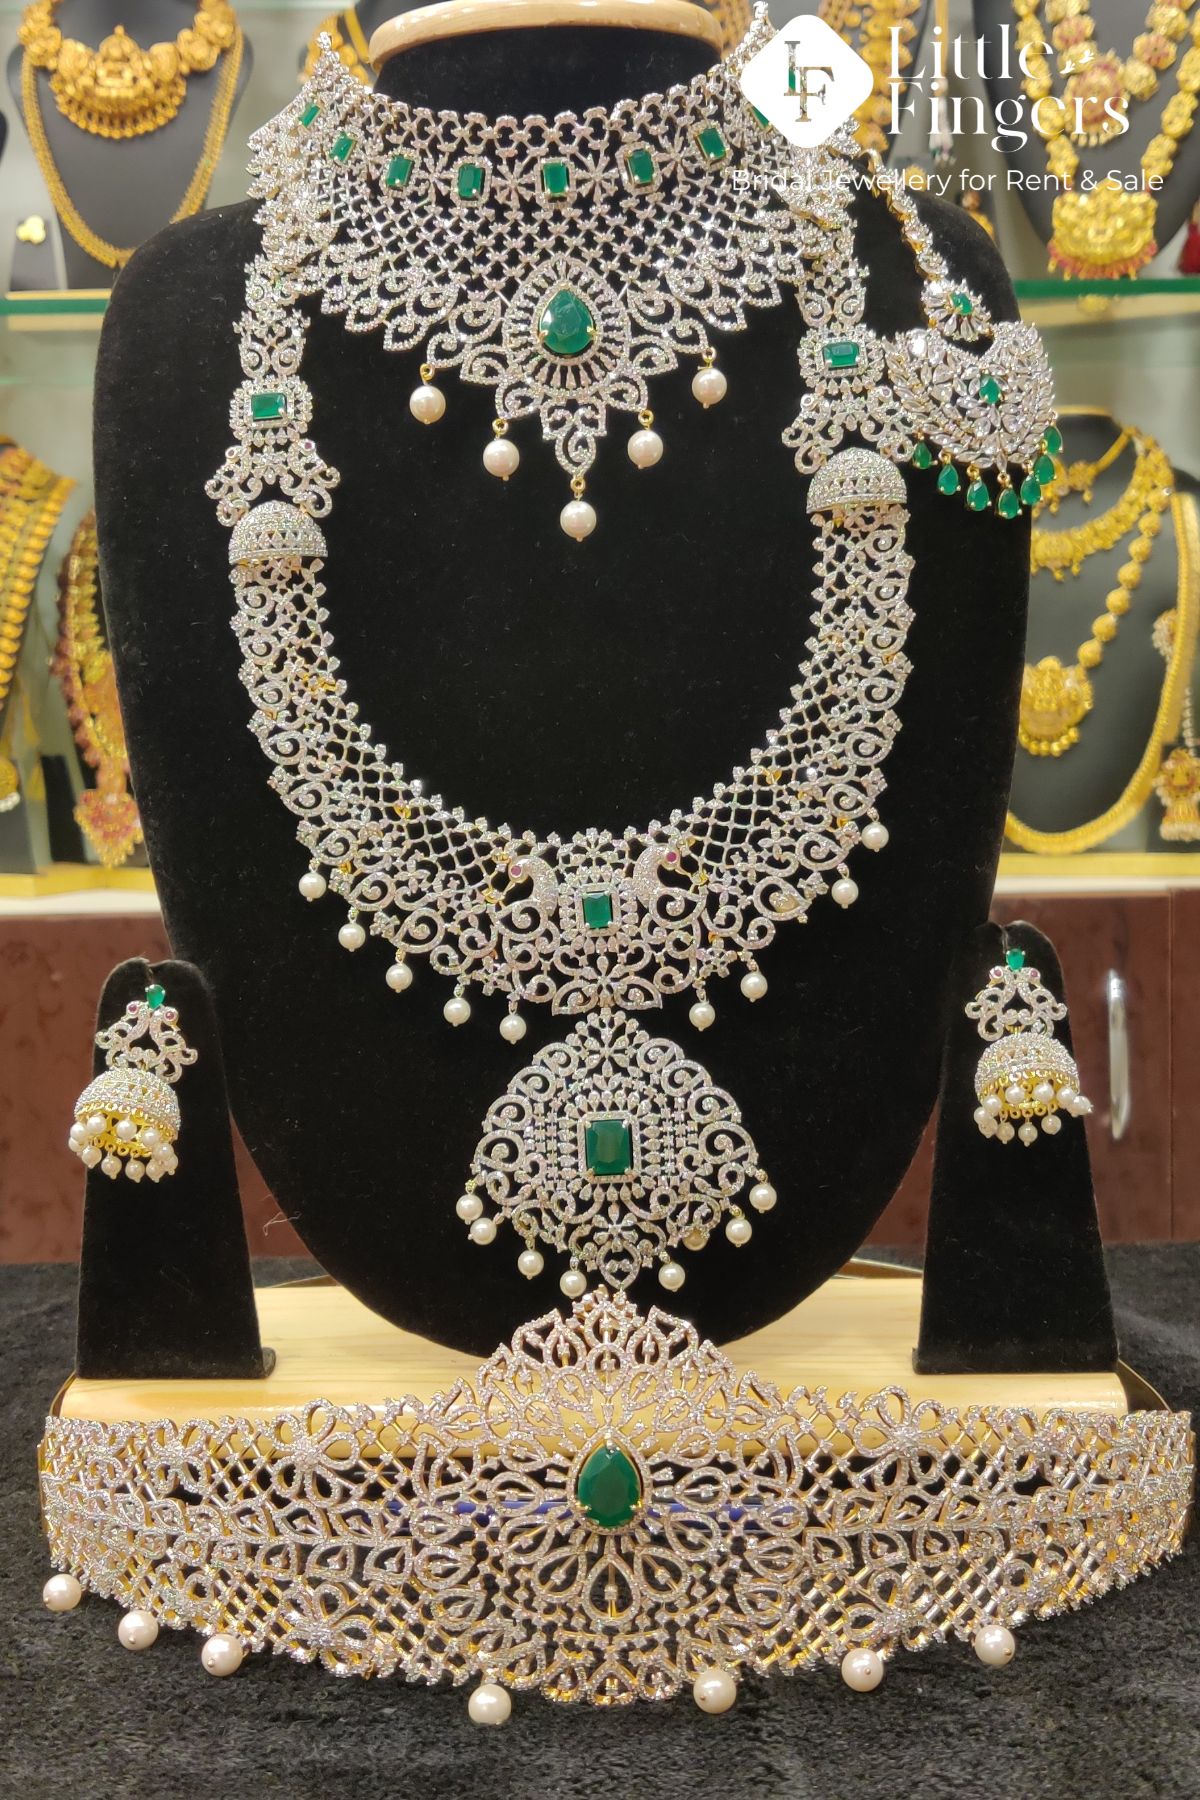 Grand American Diamond Stone Bridal Jewellery For Rent - Little Fingers ...